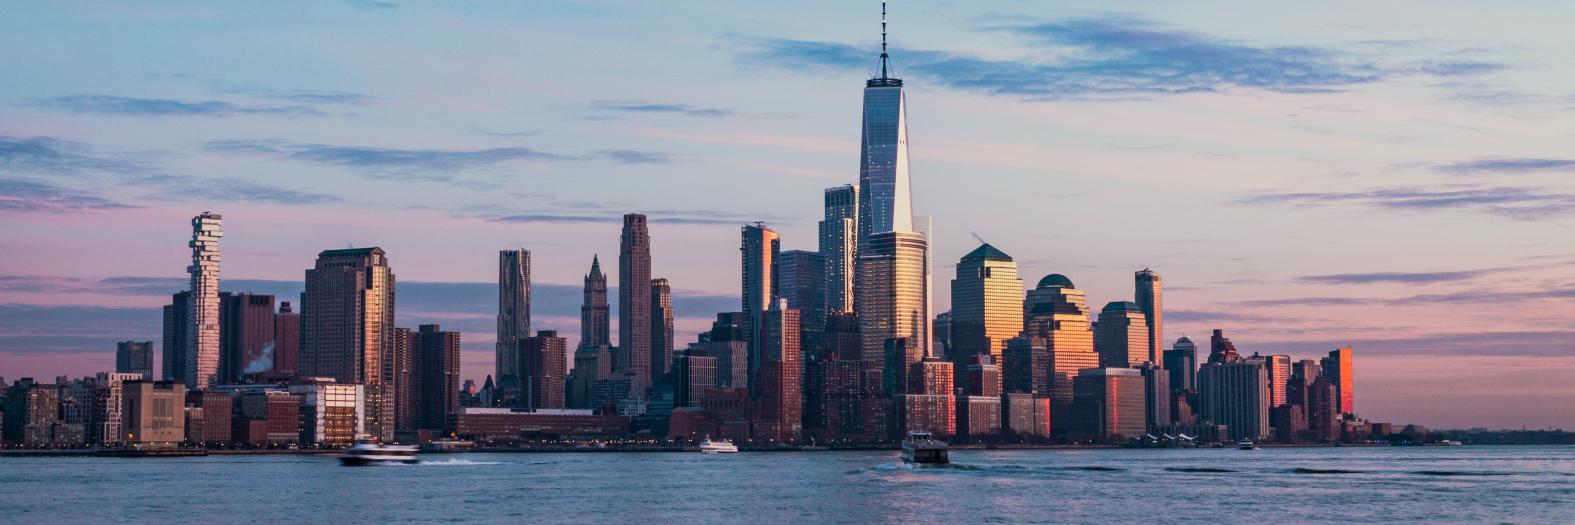 New York City skyline (Photo by Mike C. Valdivia on Unsplash)